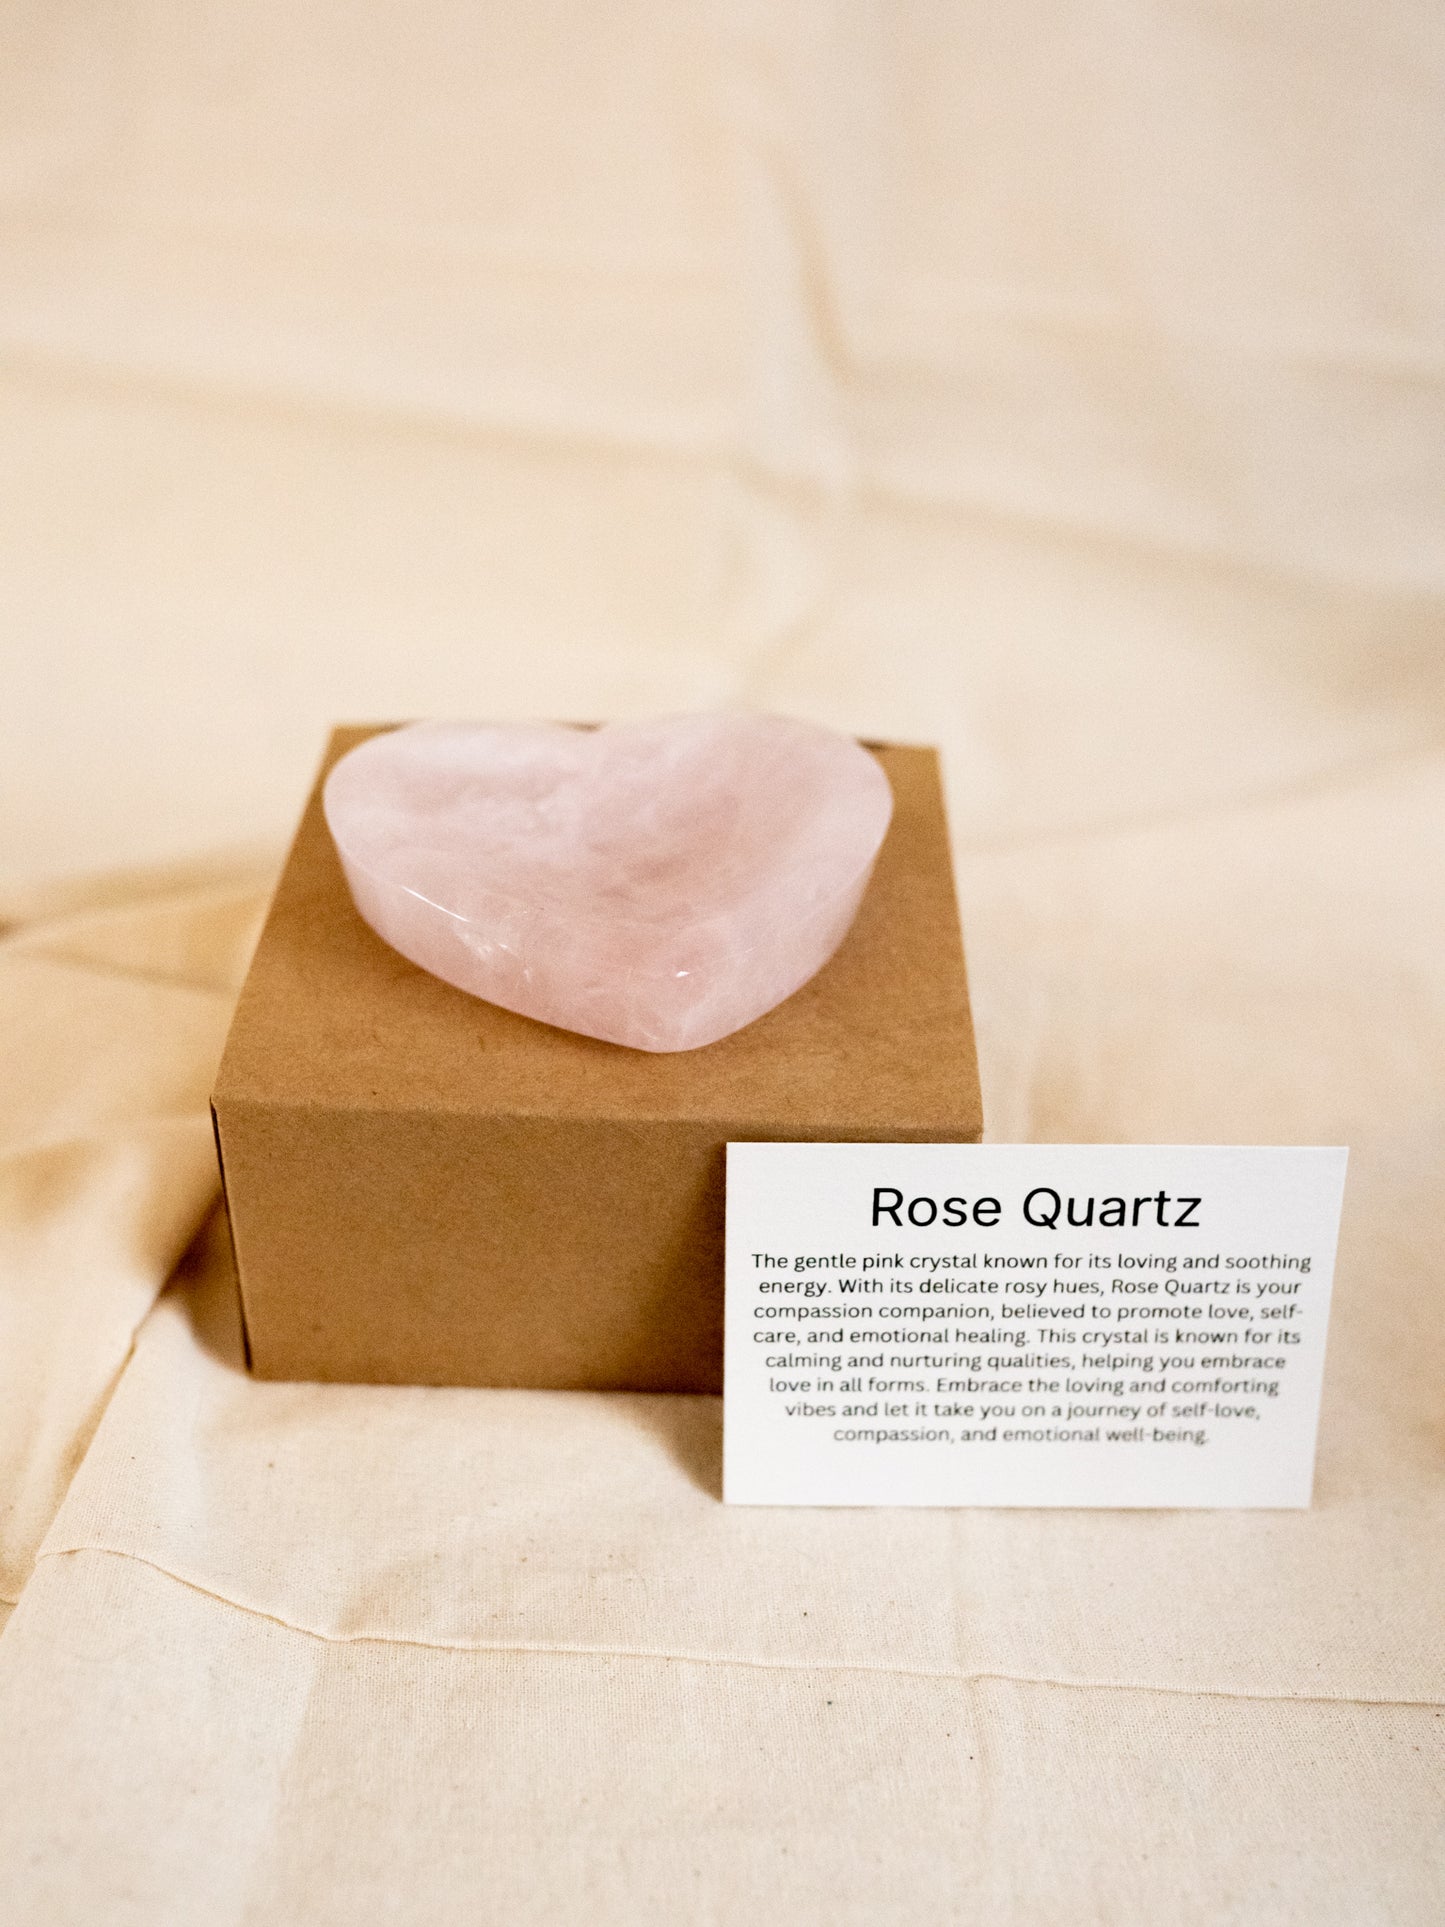 Heart Shaped Rose Quartz Bowl With Gift Box